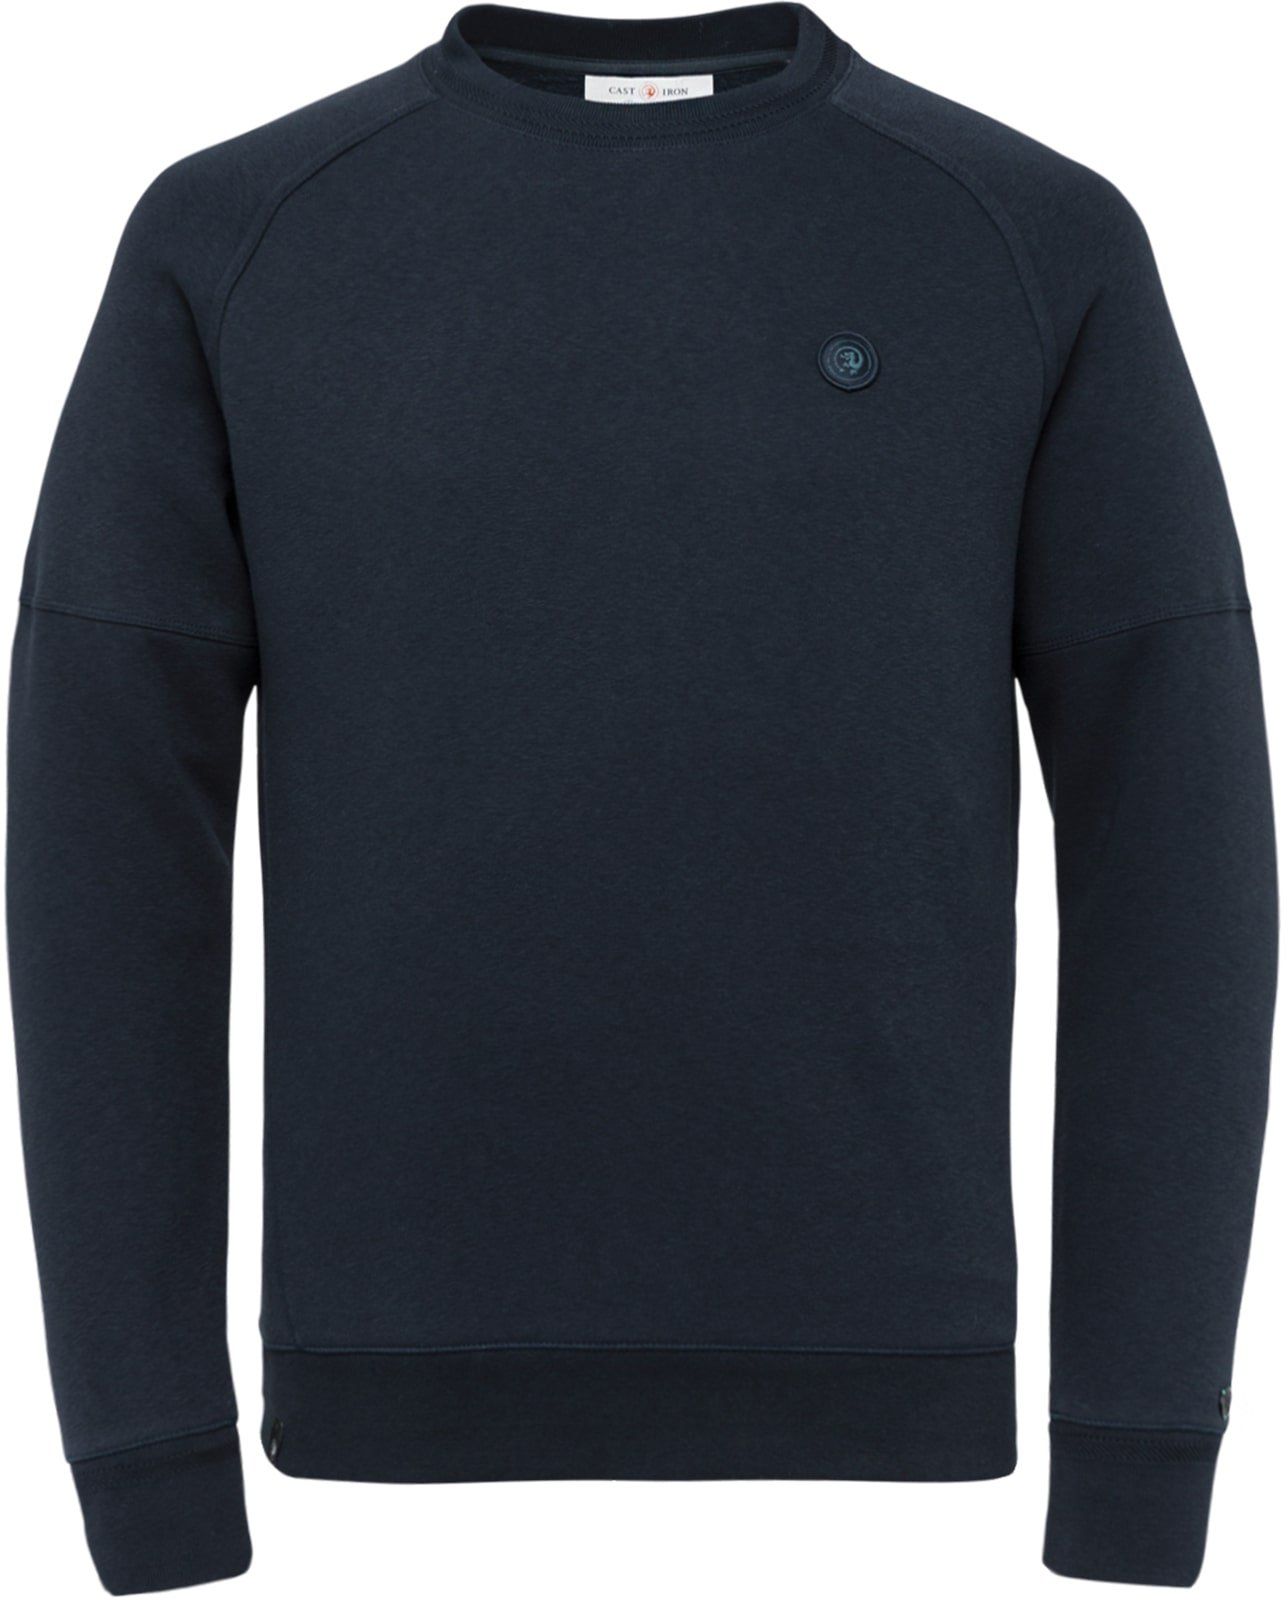 Cast Iron Sweater Navy Dark Blue size L